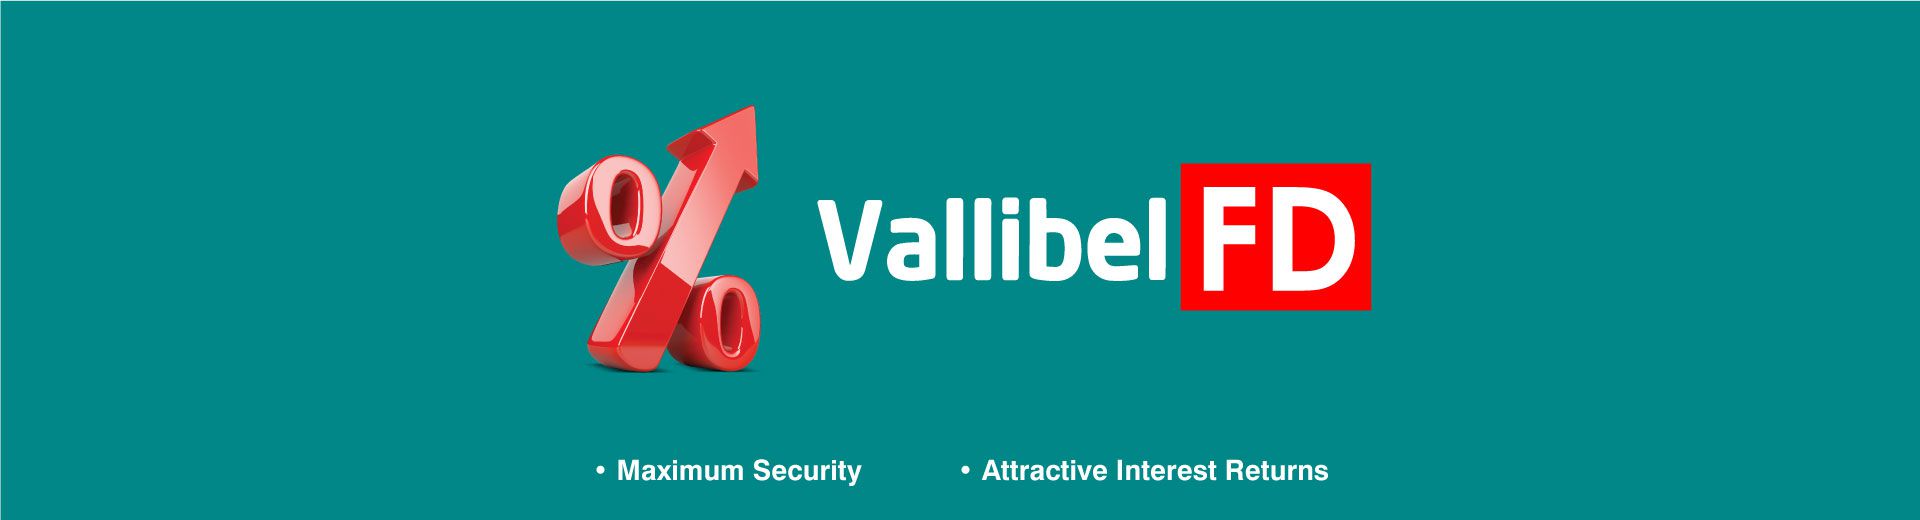 Vallibel Finance PLC Fixed Deposits Fixed Deposit